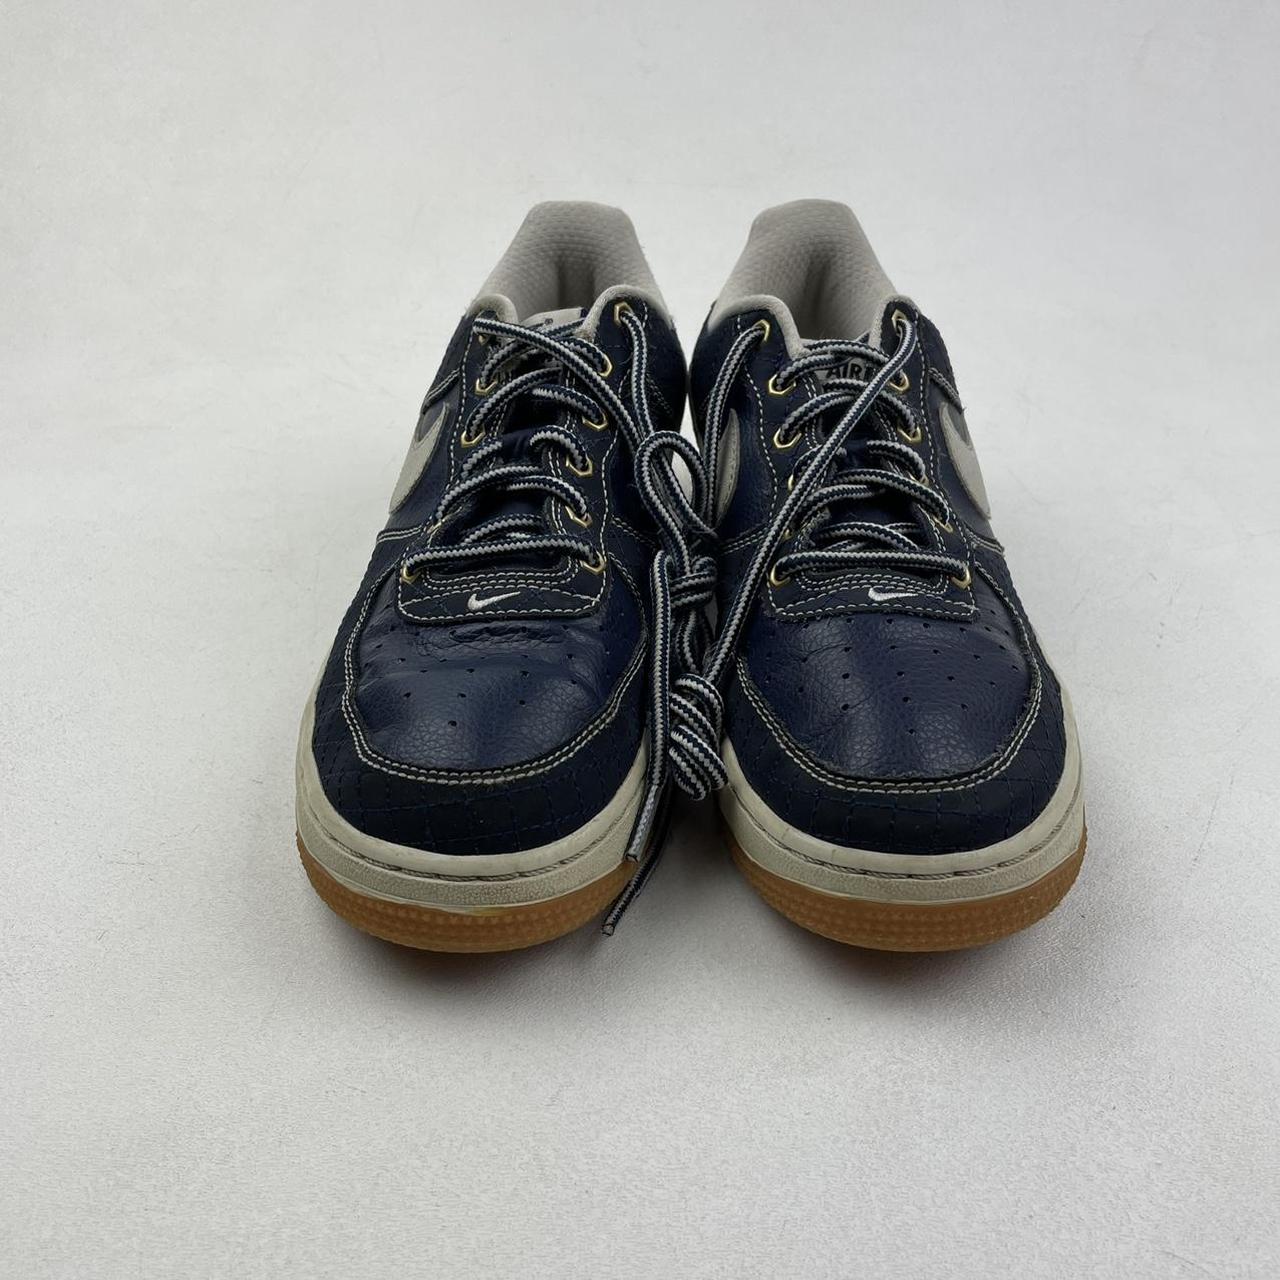 Nike Air Force 1 Premium Shoes Size 7.5 Obsidian Gum... - Depop